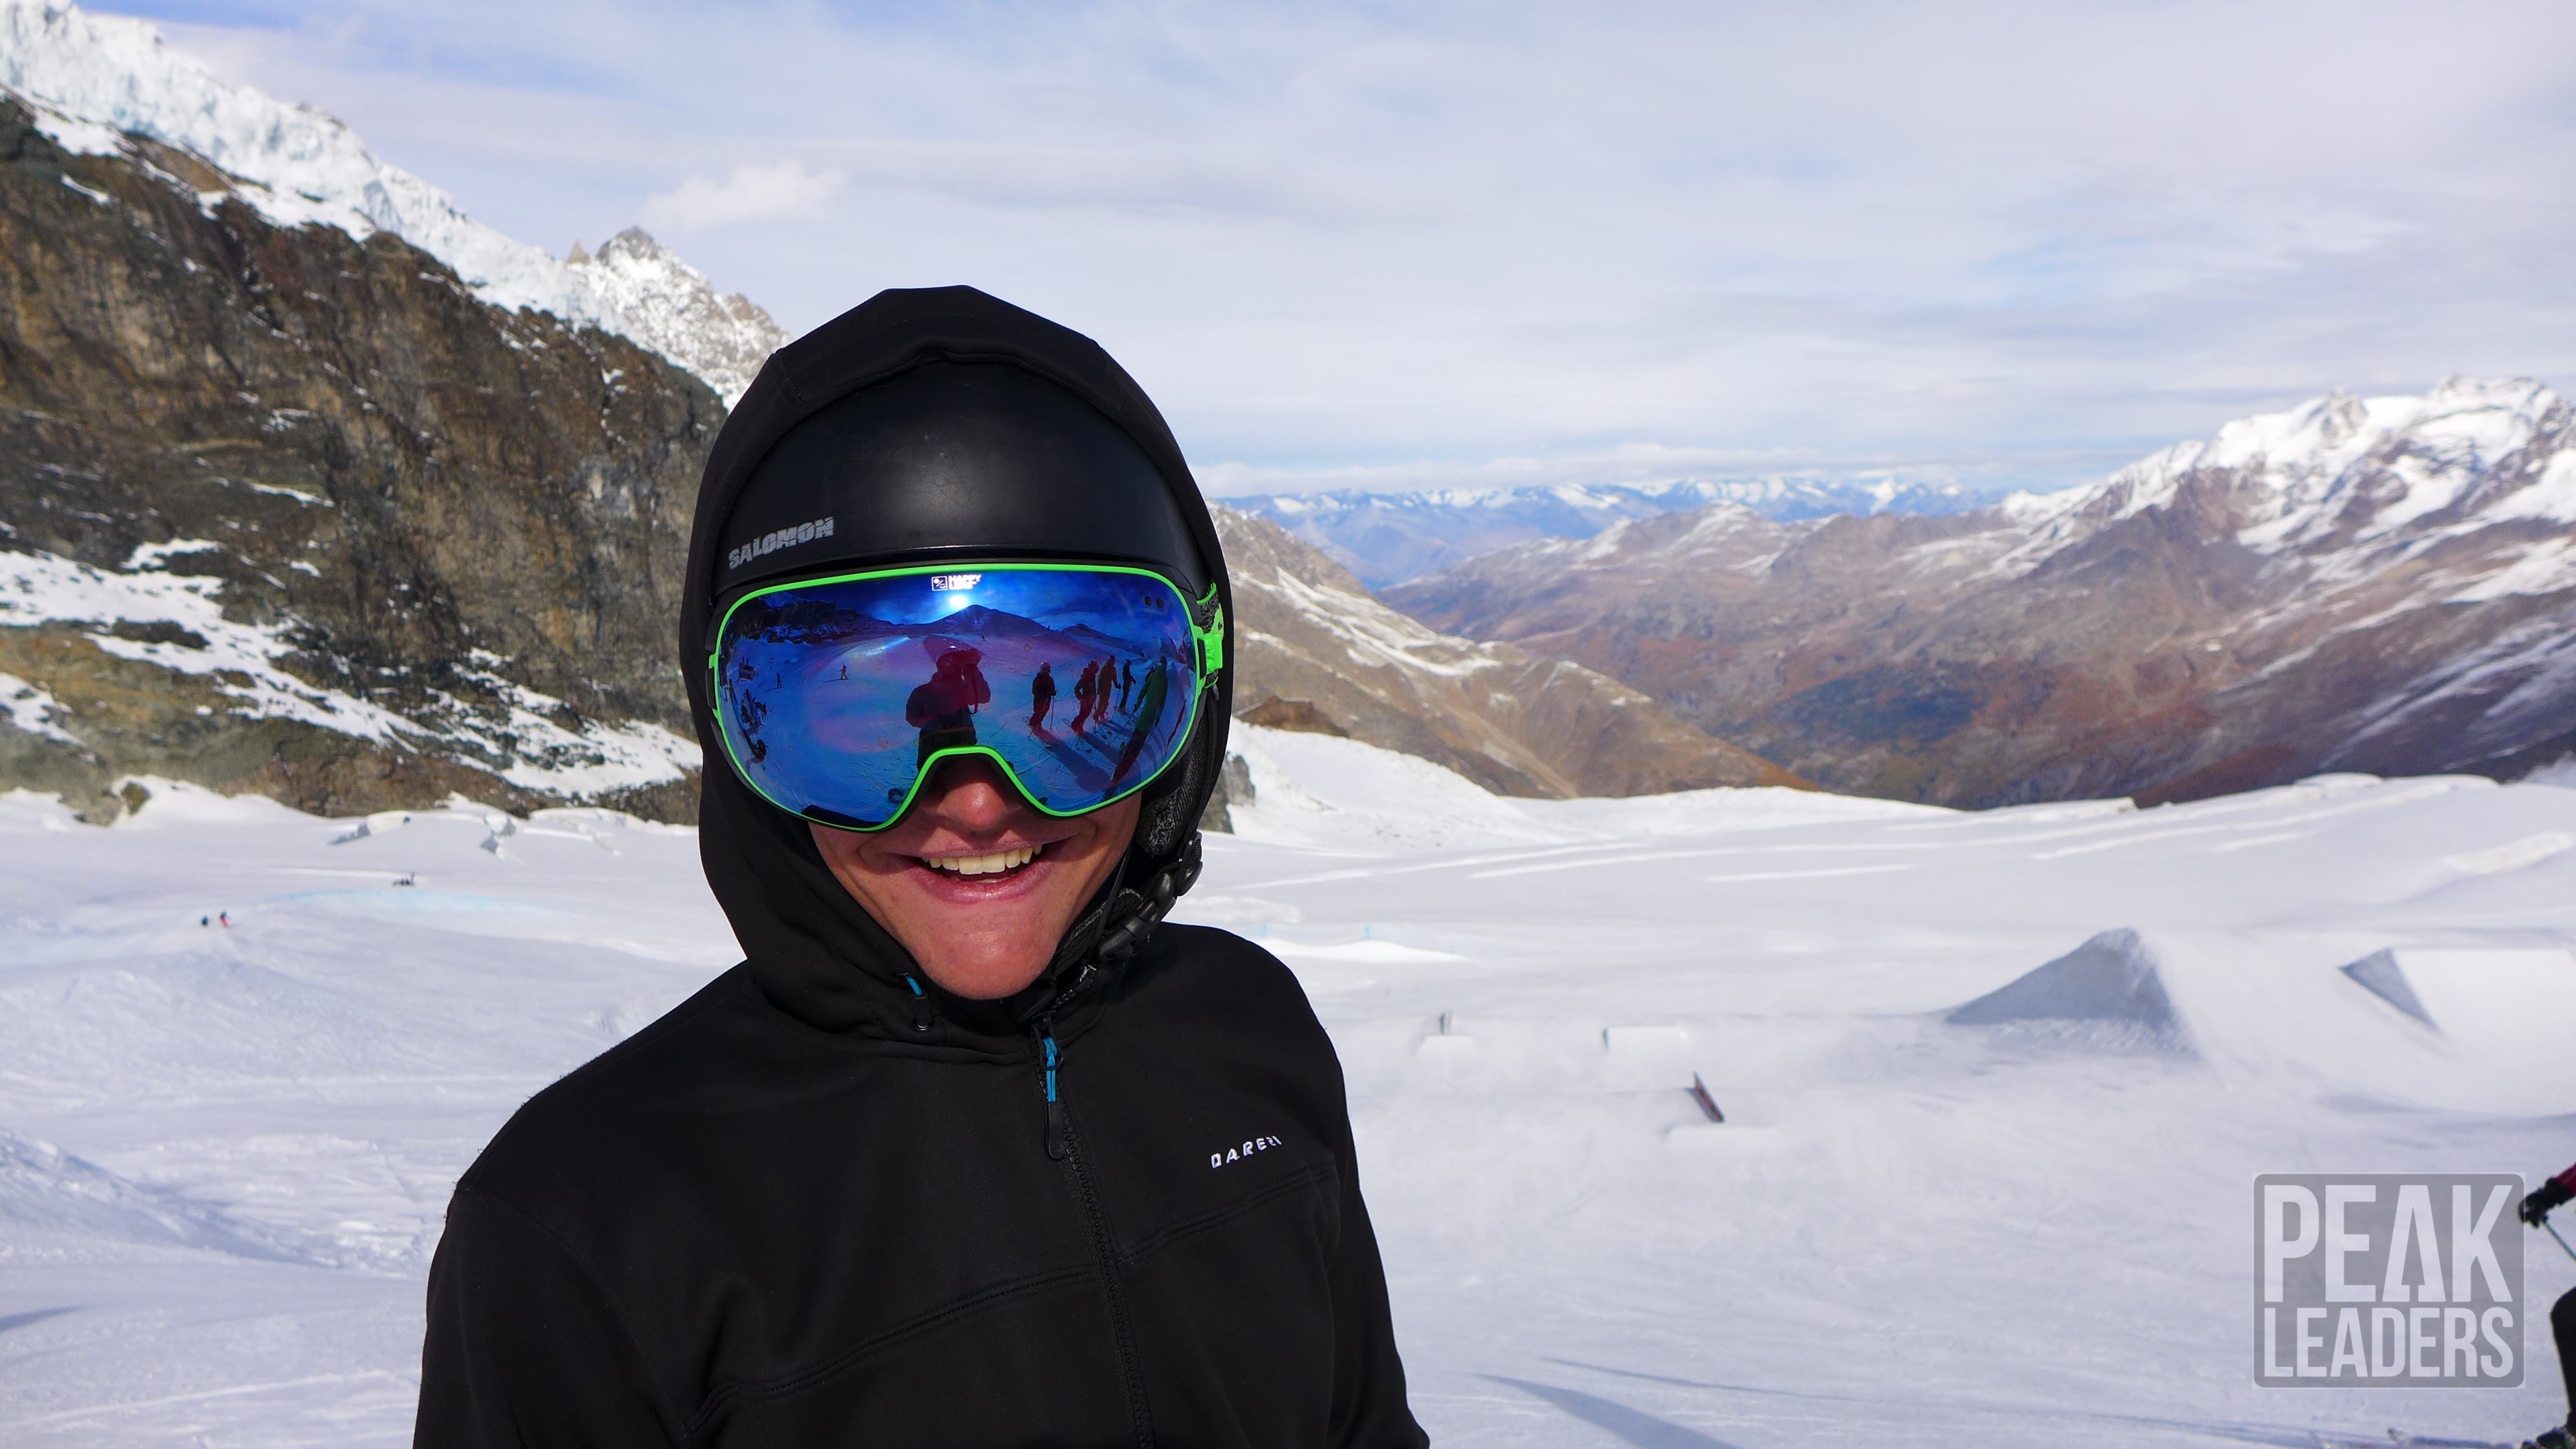 Ski Instructor Course Graduate Interview: Daniel Thomson